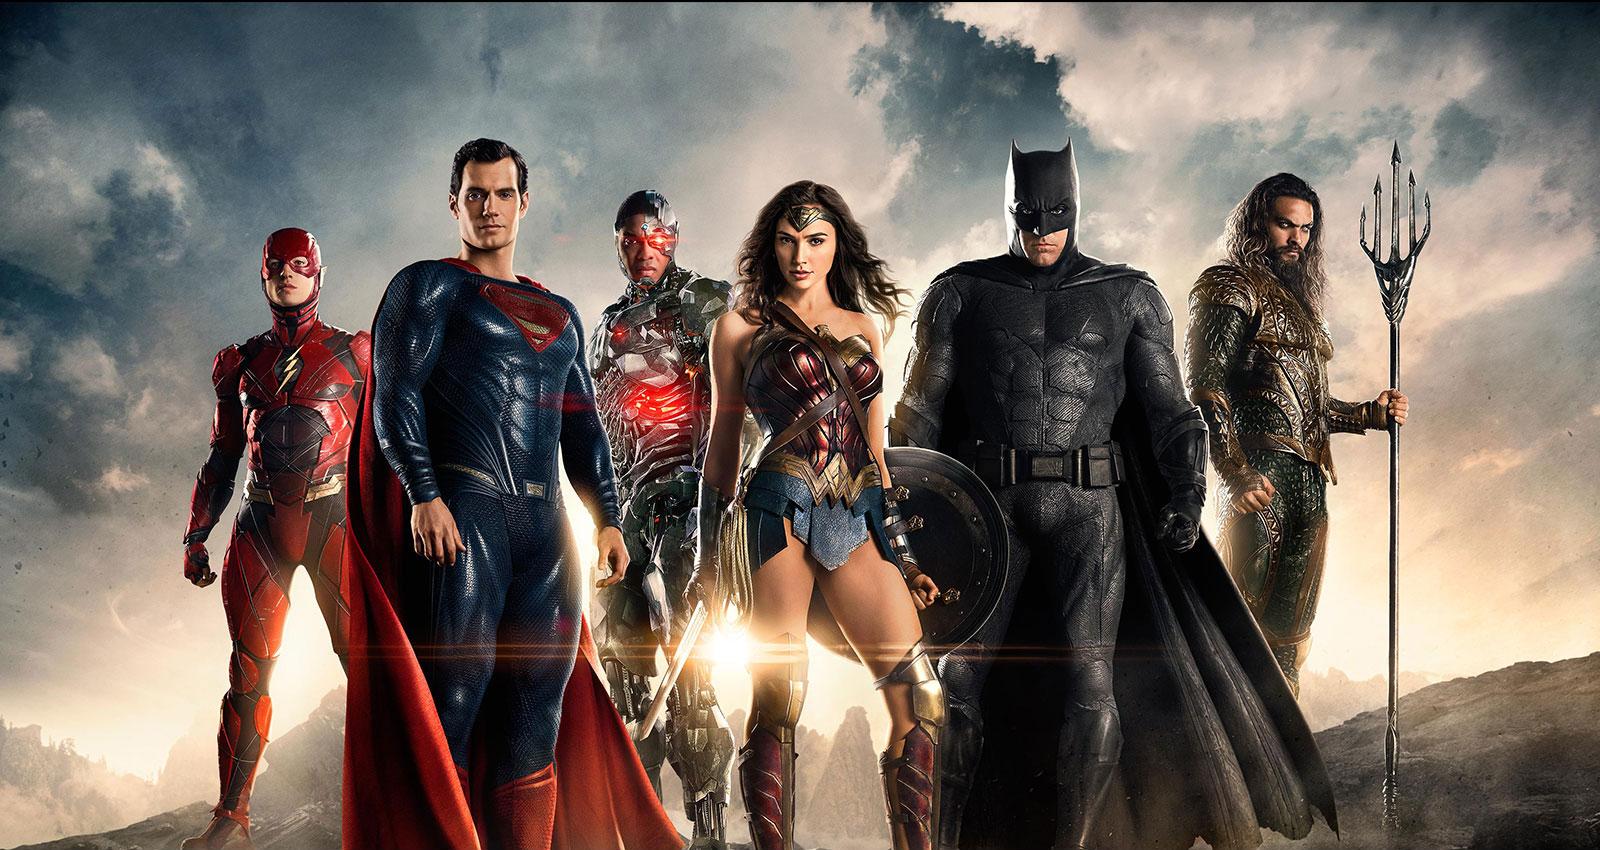 The Flash (Ezra Miller), Superman (Henry Cavill), Cyborg (Ray Fish), Wonder Woman (Gal Gadot), Batman (Ben Affleck) and Aquaman (Jason Momoa) in Justice League (2017)